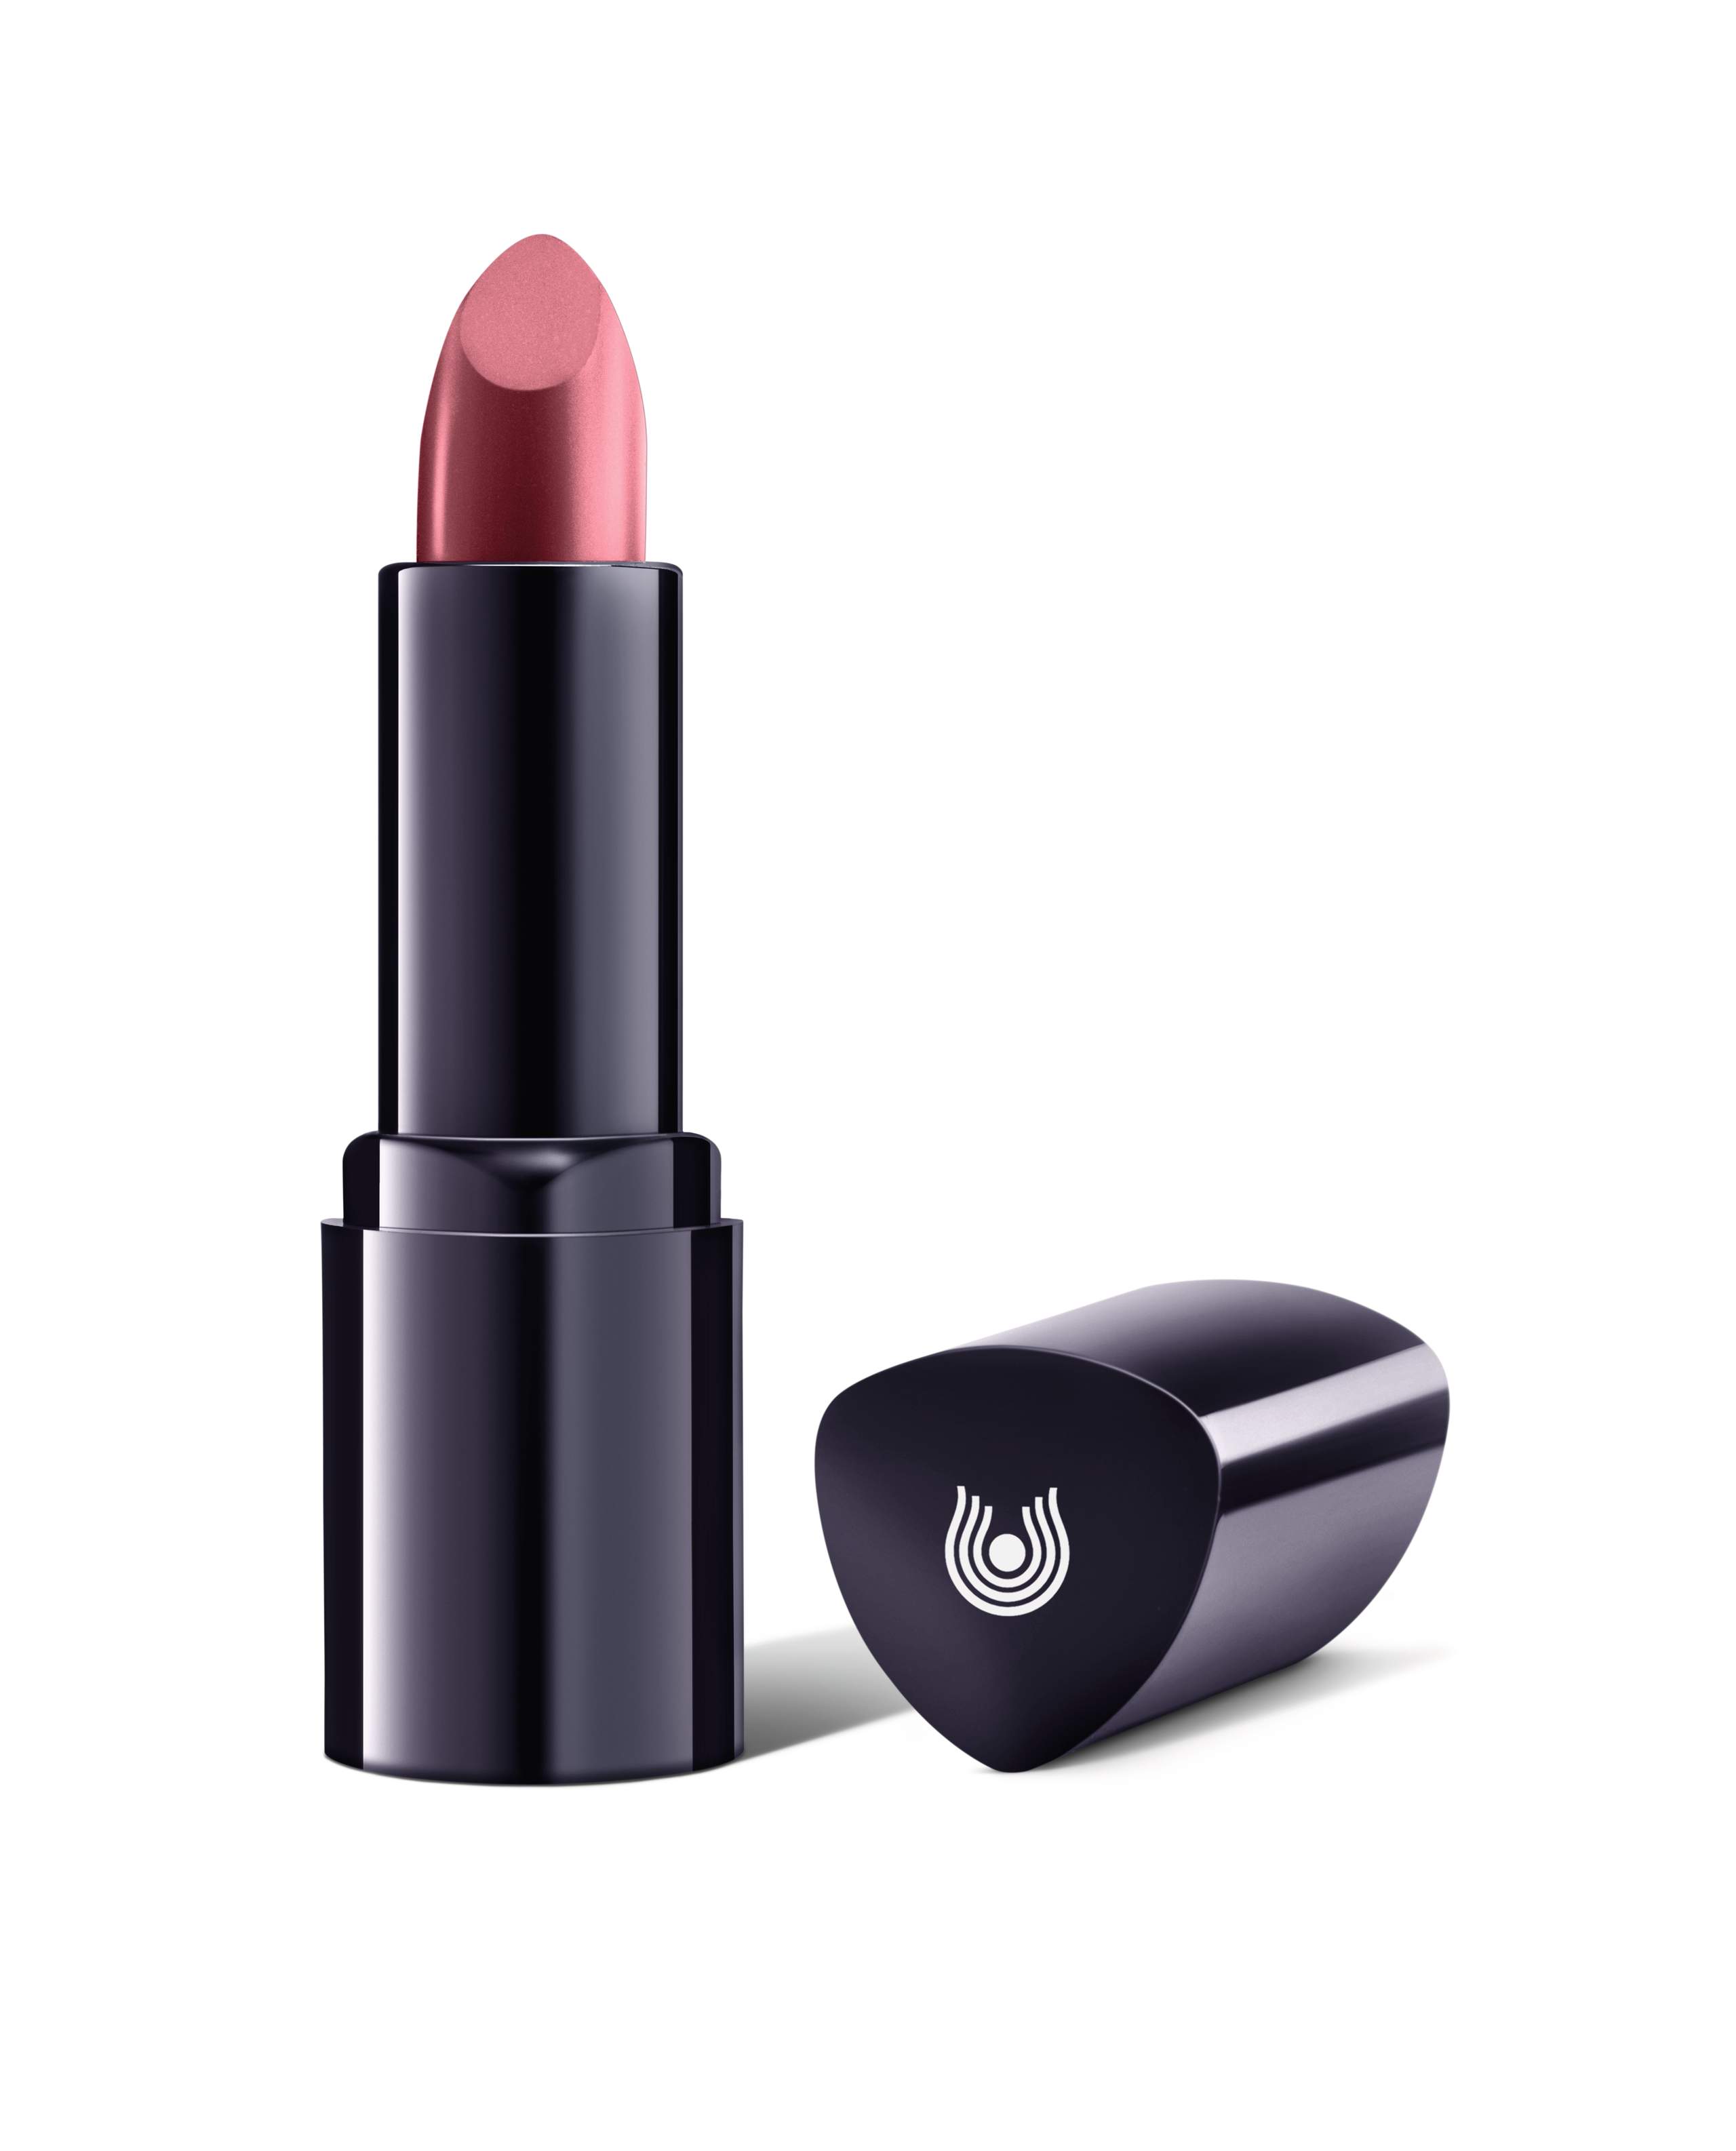 Lipstick 03 camellia